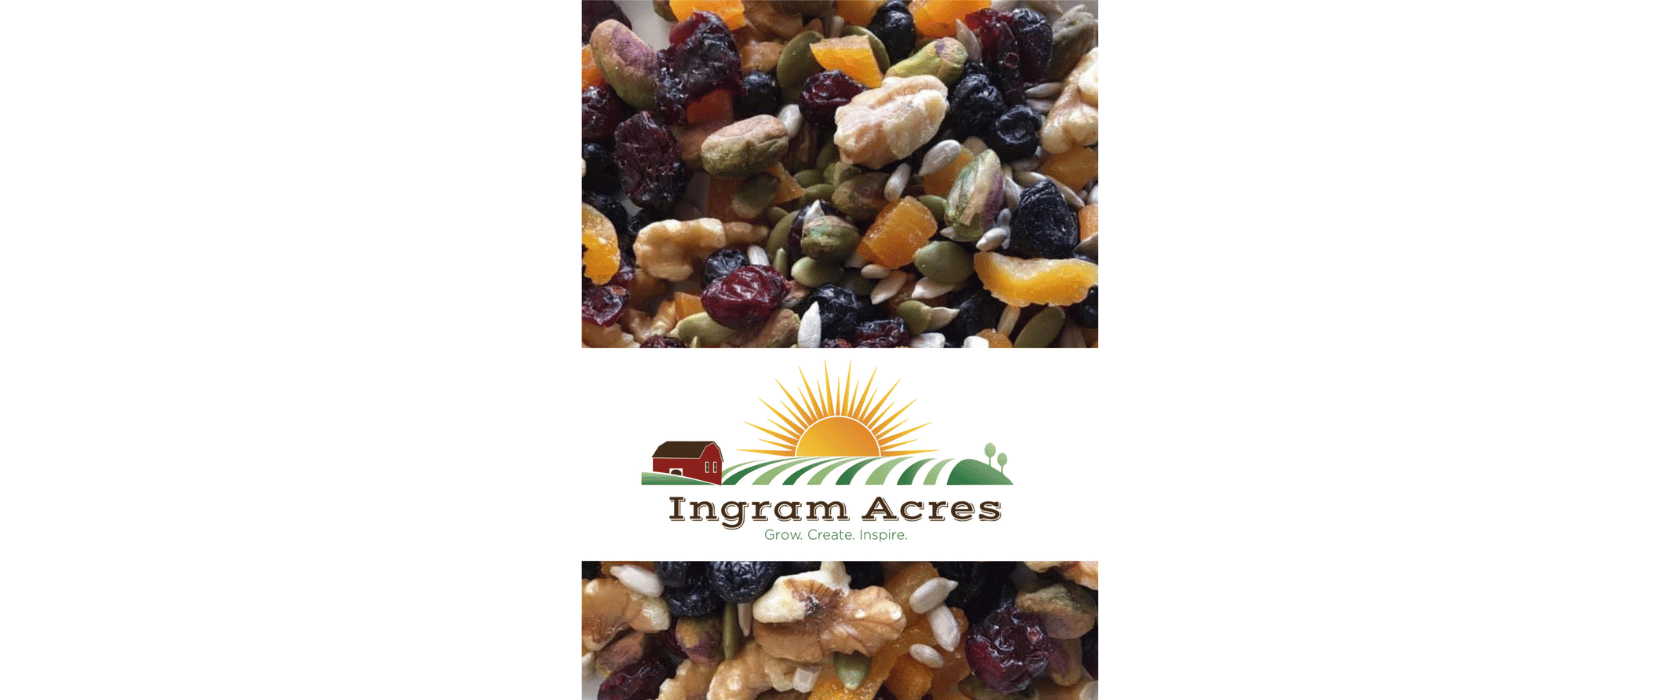 Ingram Acres logo on a background image of granola full of fruits and nuts